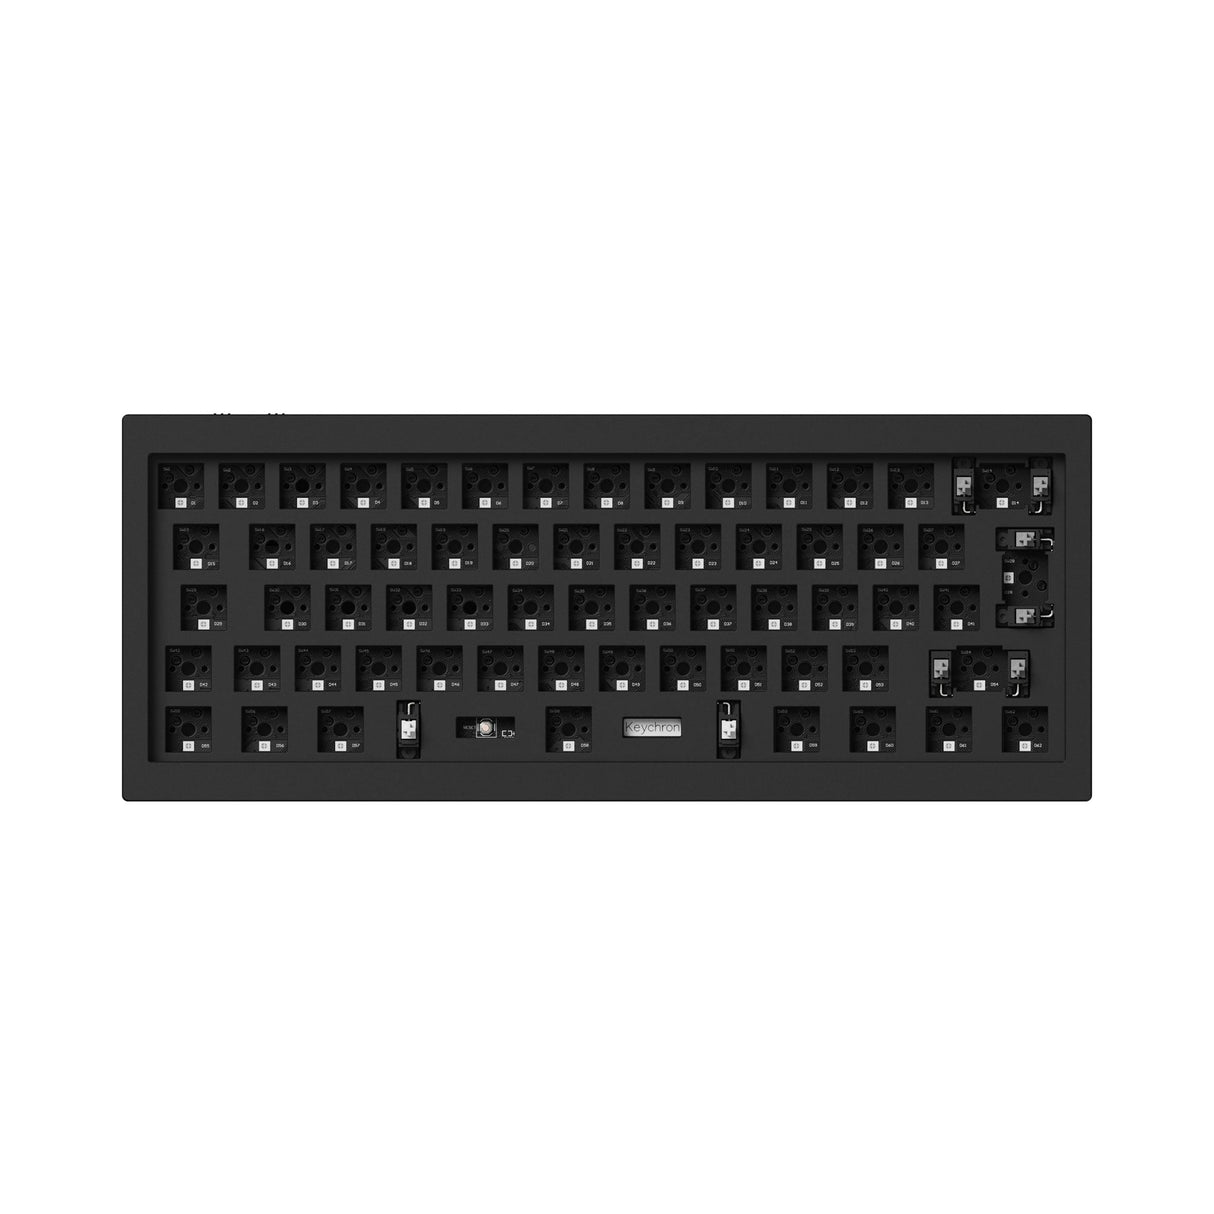 Keychron Q4 Pro QMK/VIA wireless custom mechanical keyboard 60 percent layout full aluminum black frame for Mac WIndows Linux with RGB backlight and hot-swappable barebone ISO